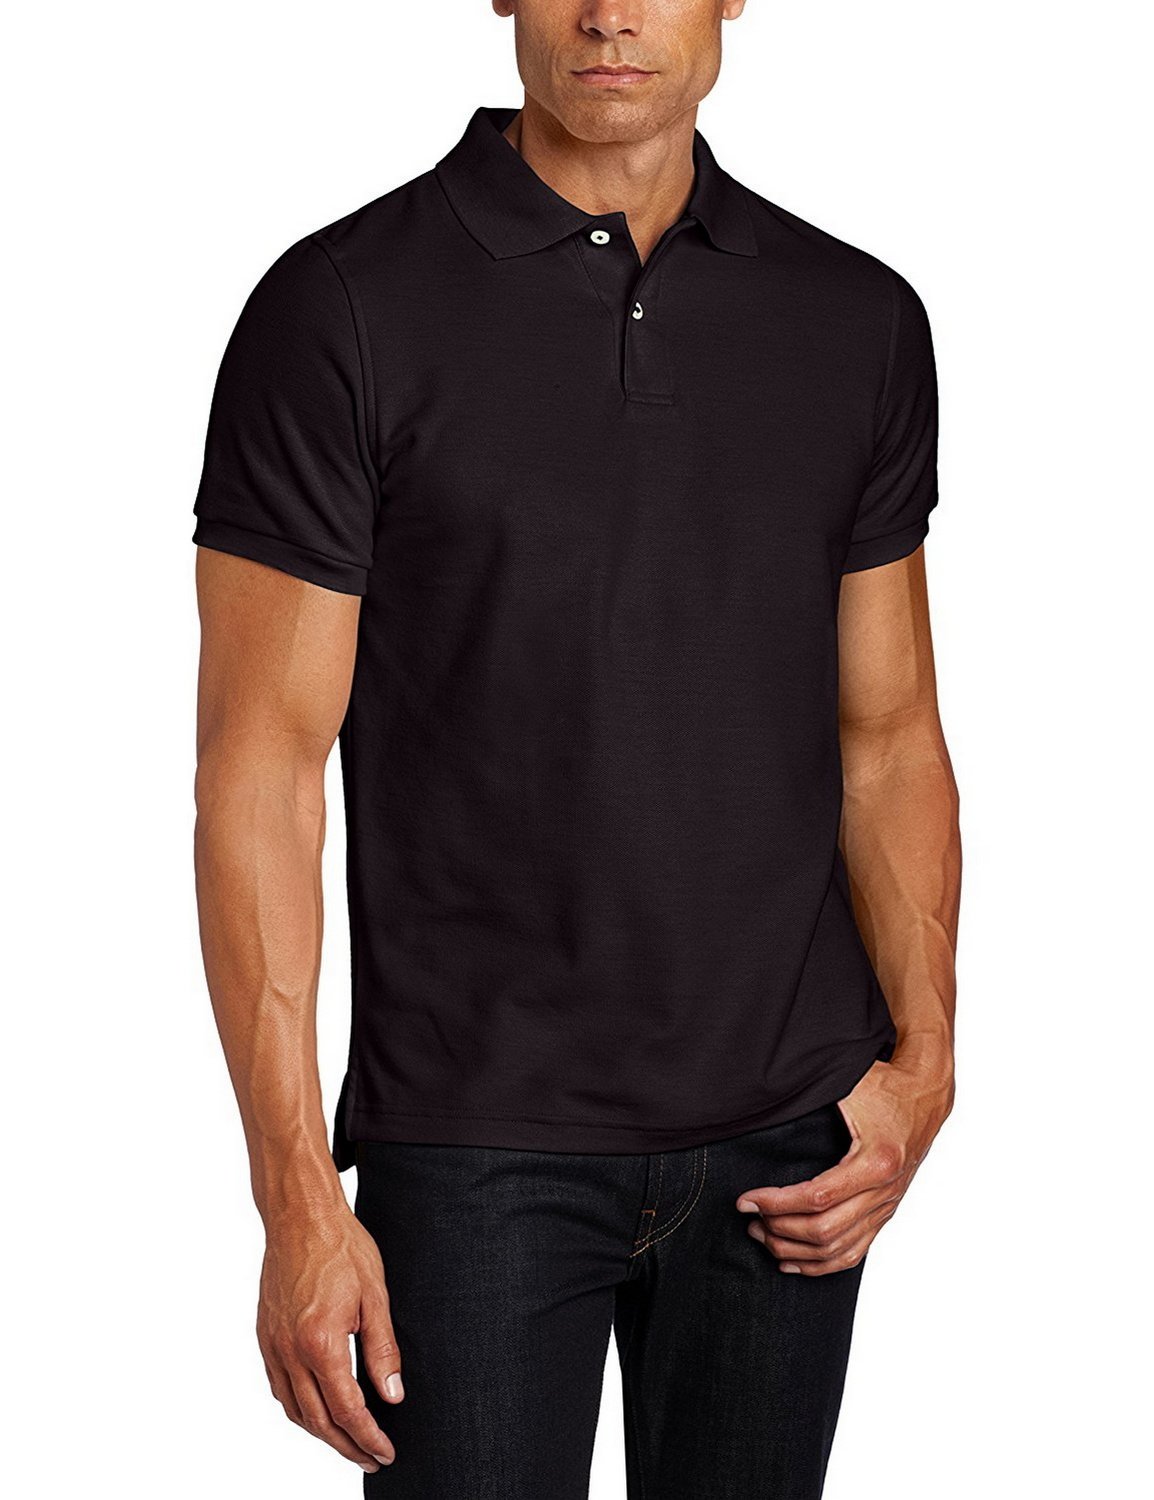 Lee Uniforms Men's Modern Fit Short Sleeve Polo Shirt – The